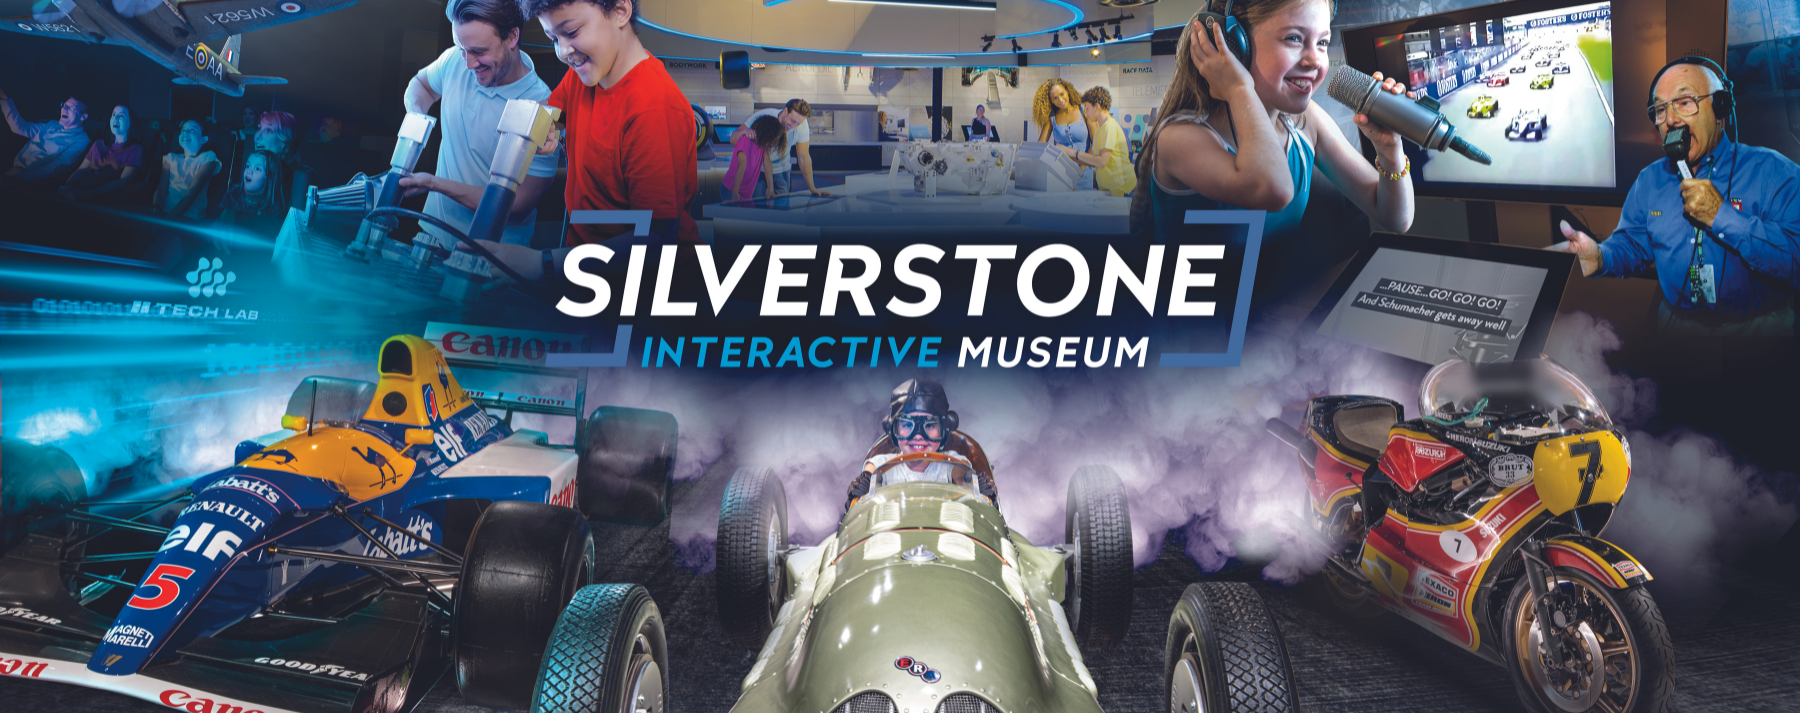 Silverstone Museum intro